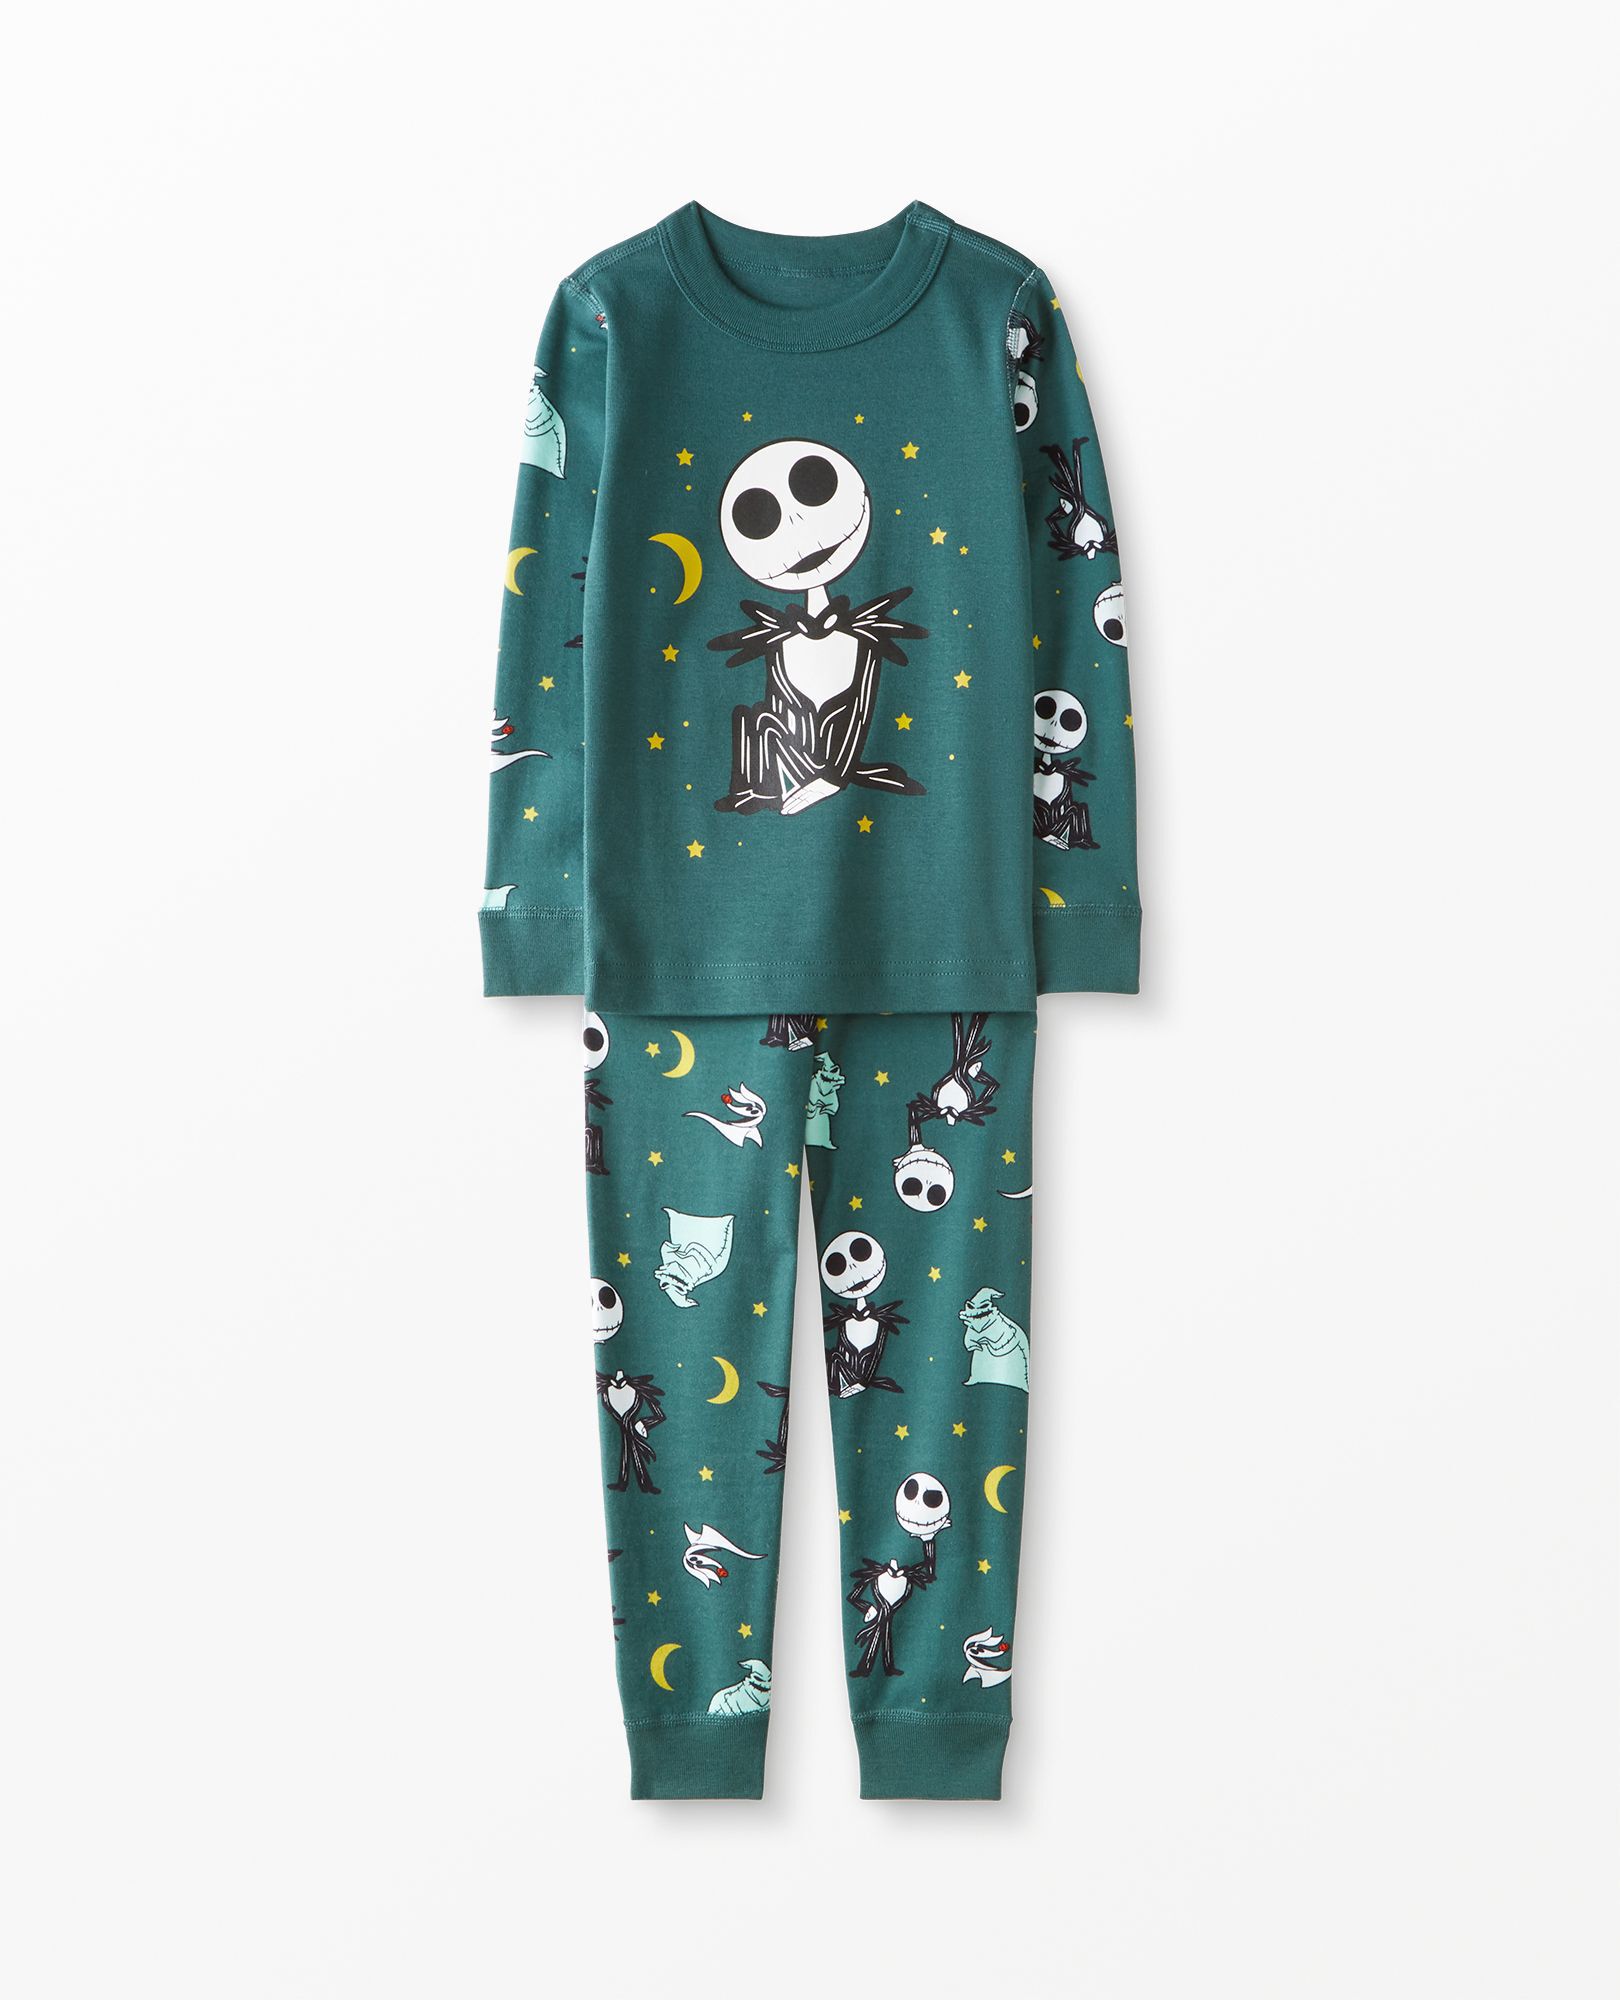 【Mopeez】 Jack Skellington Pajama Version